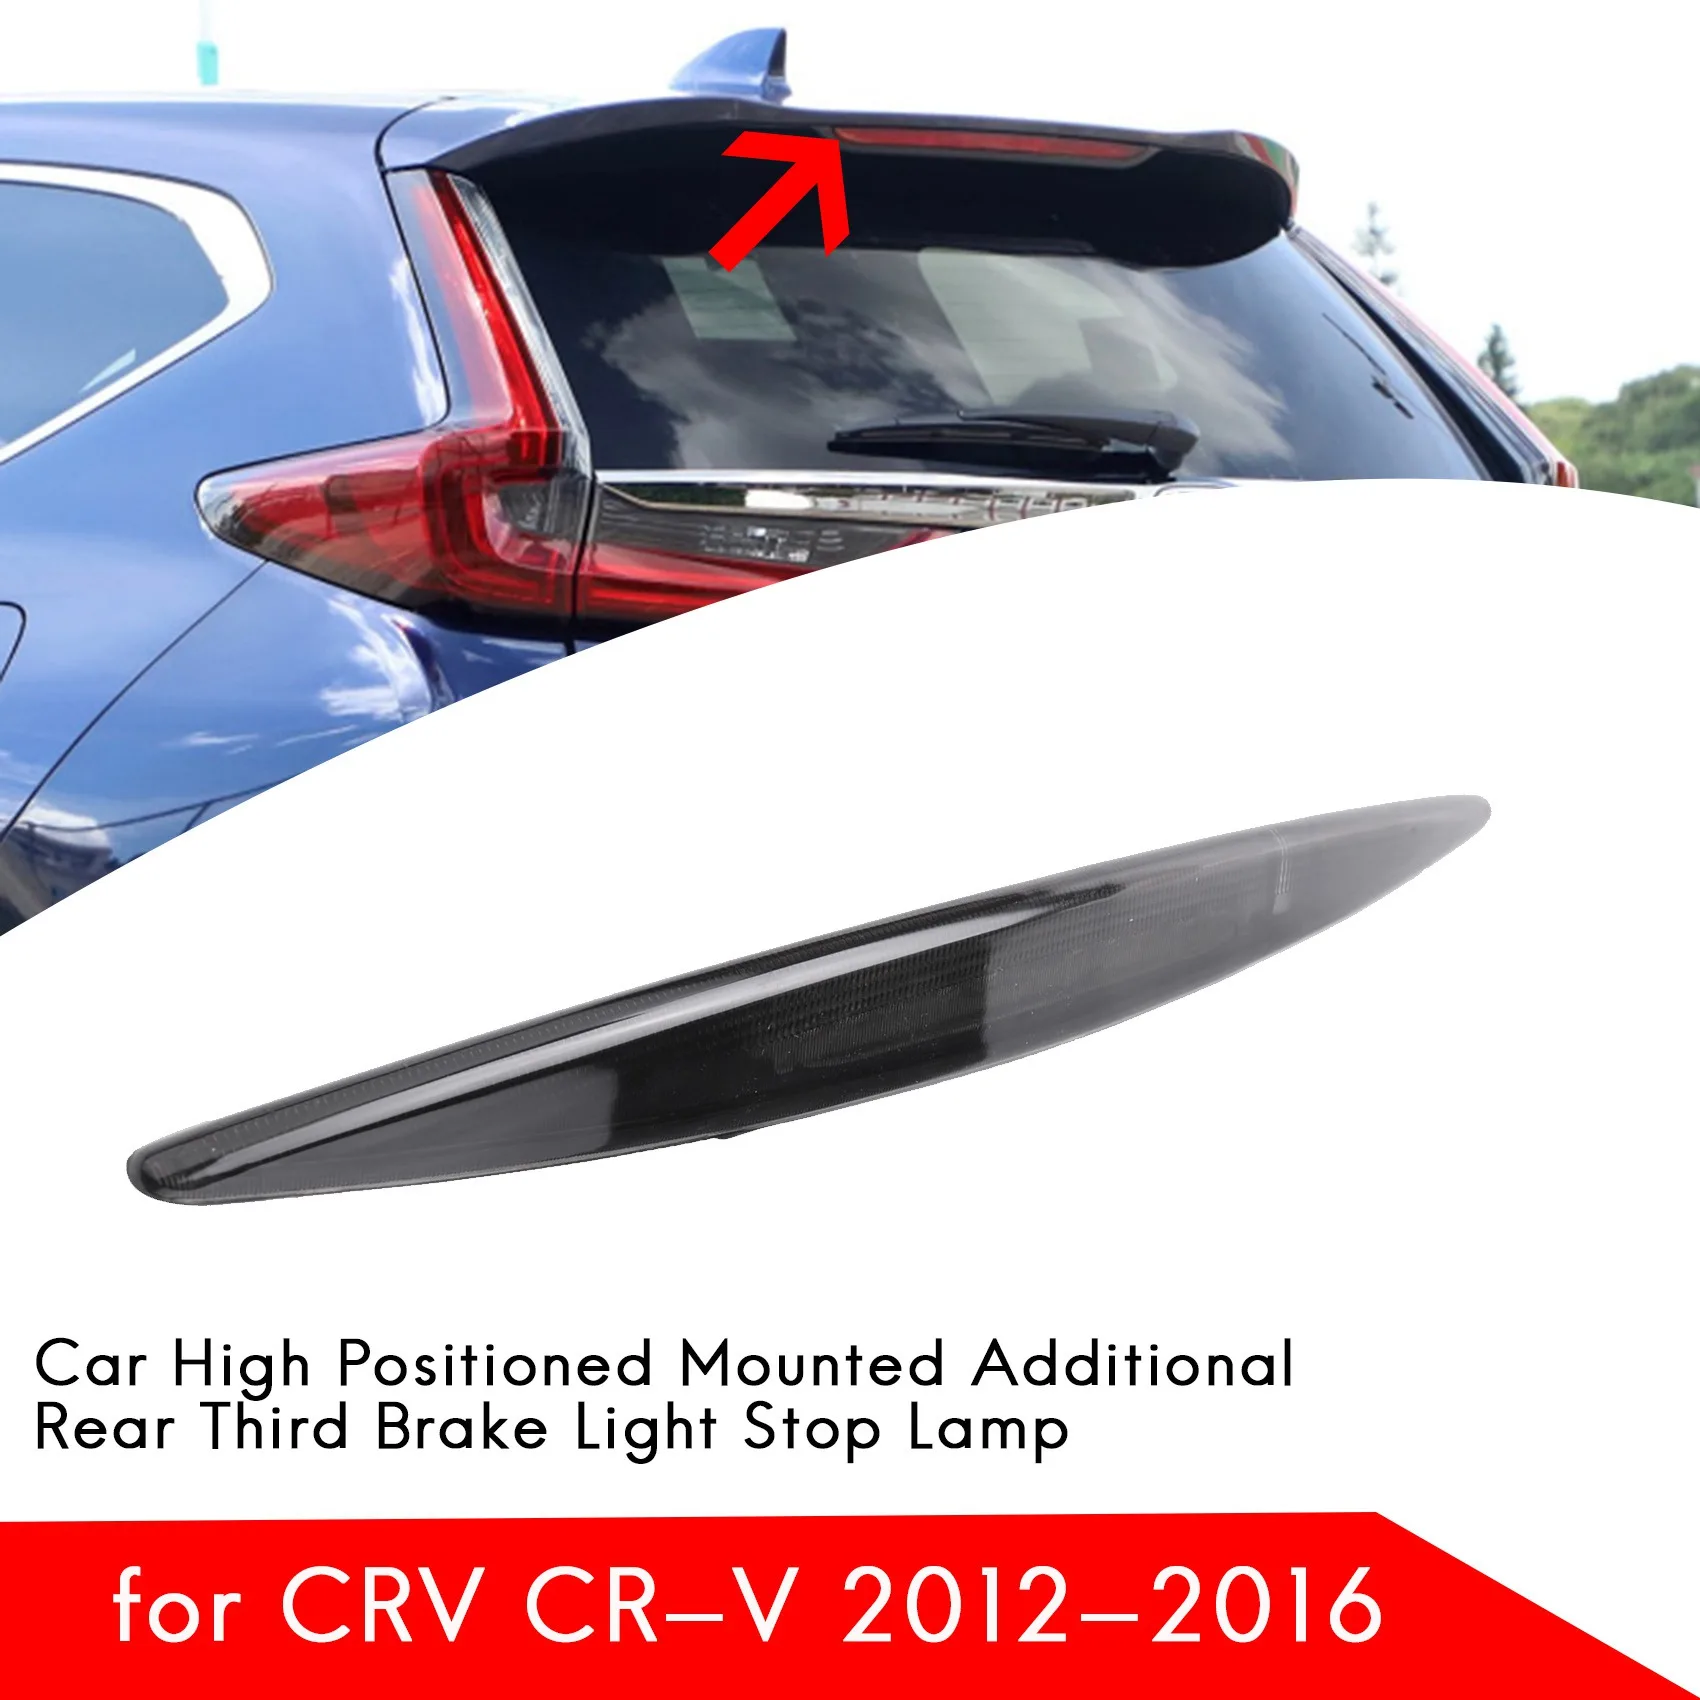 Car High Positioned Mounted Additional Rear Third Brake Light Stop Lamp for Honda CRV CR-V